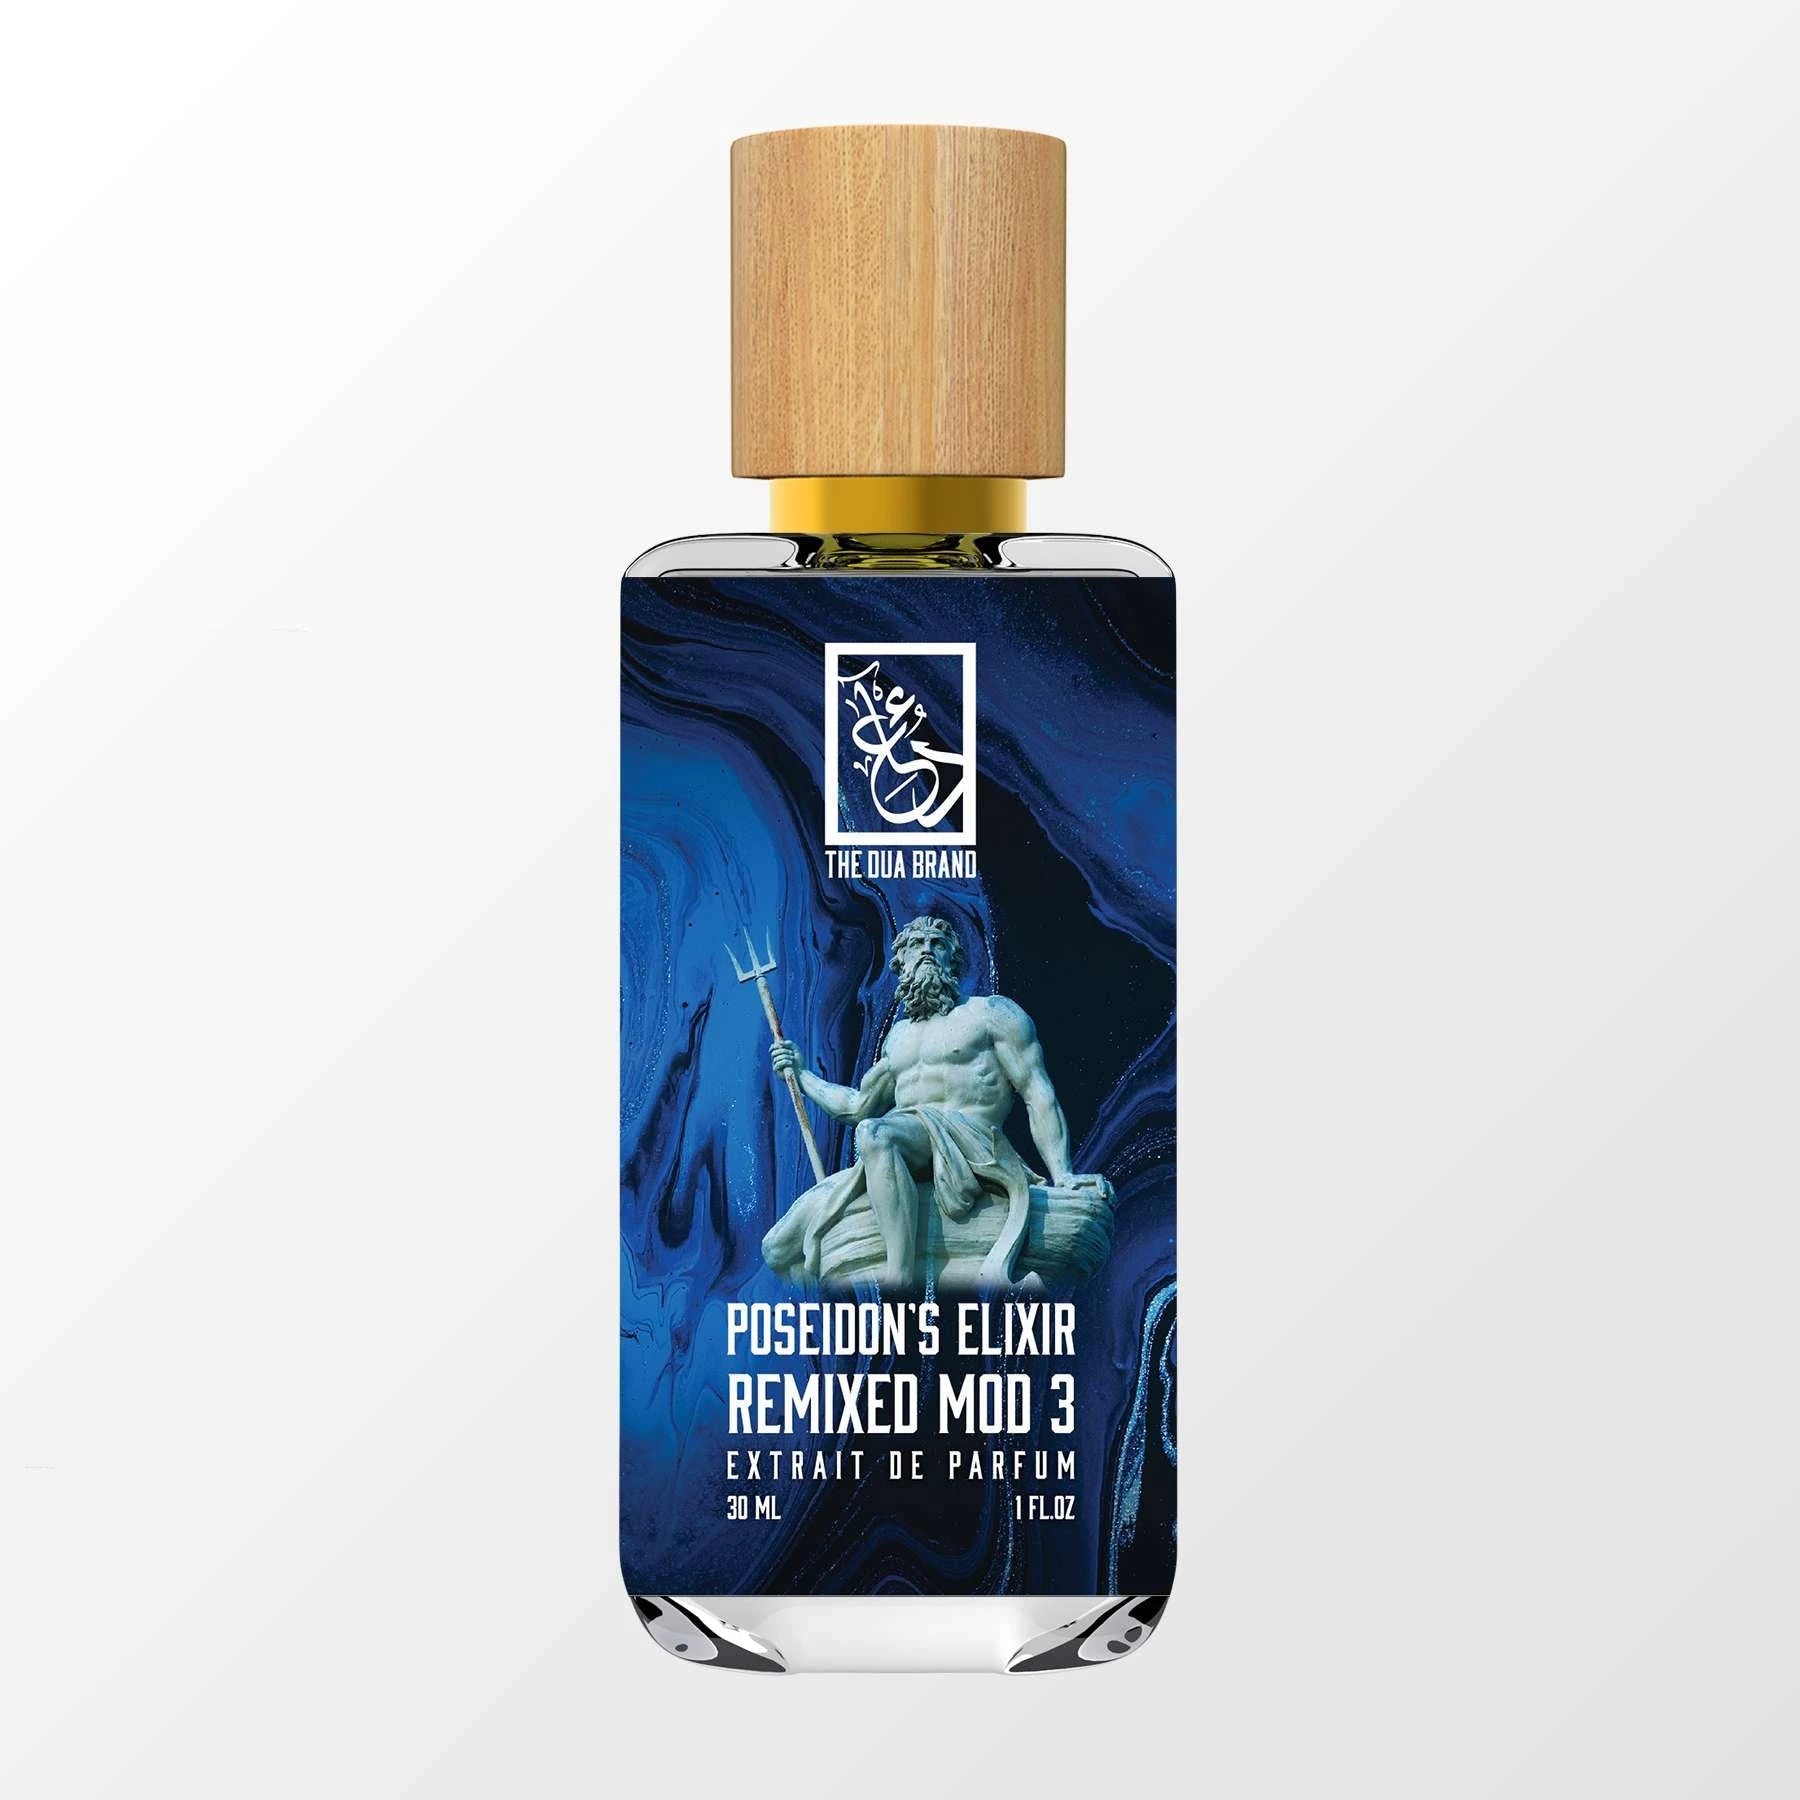 Bleu De Chanel Parfum - Honest Reviews on Performance